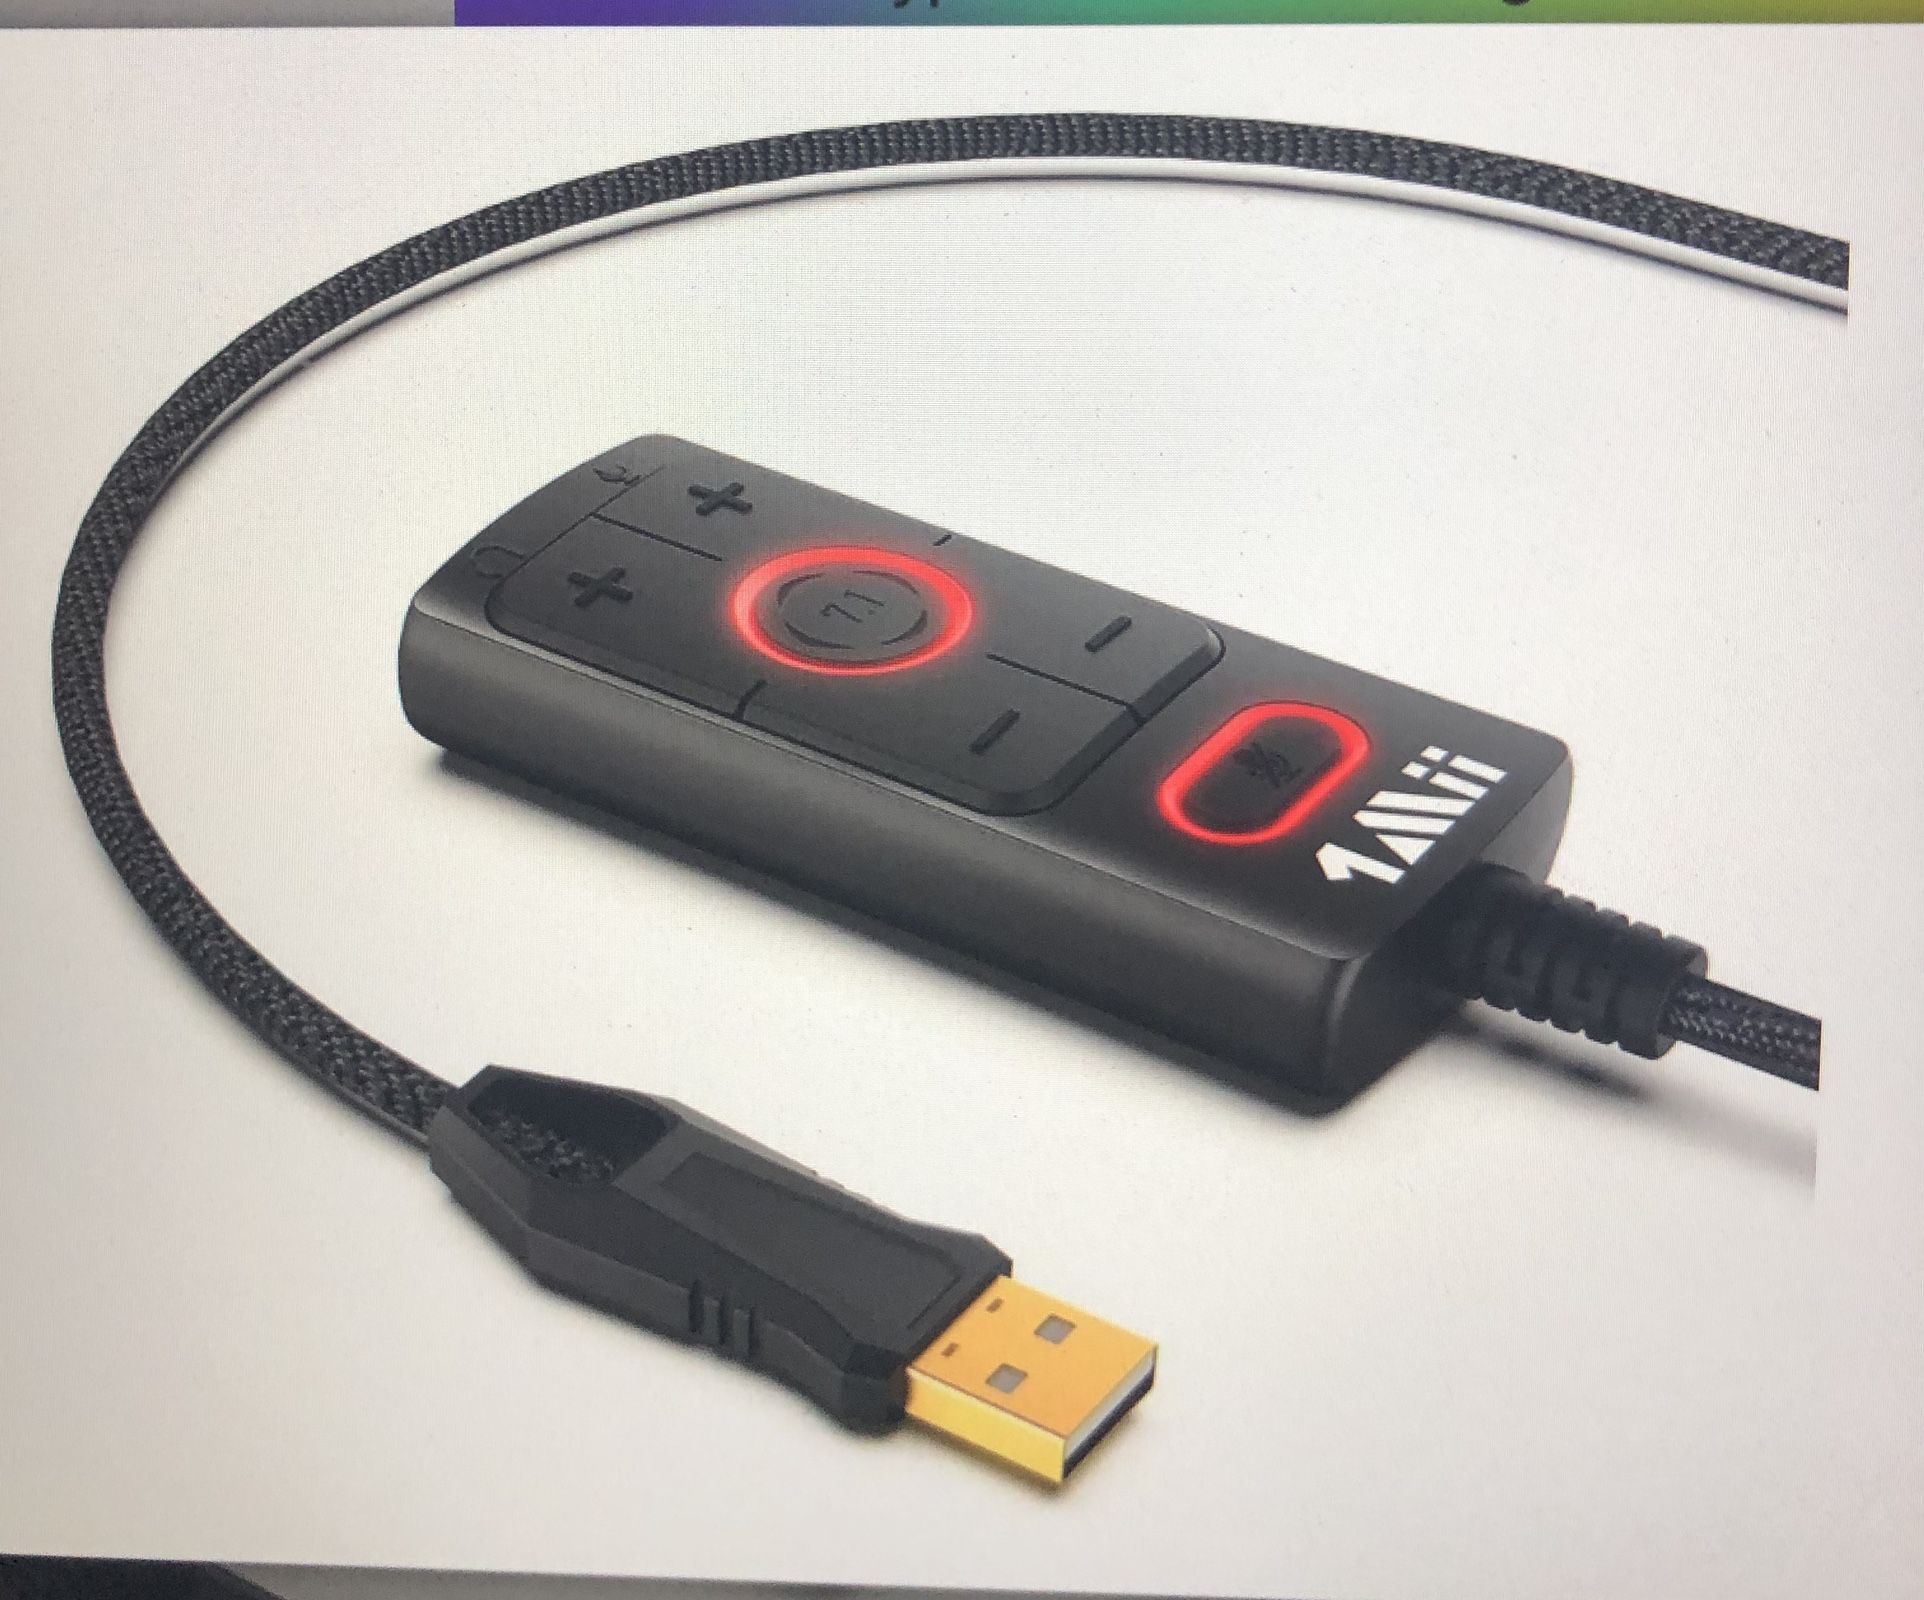 1 Mii USB Sound Card